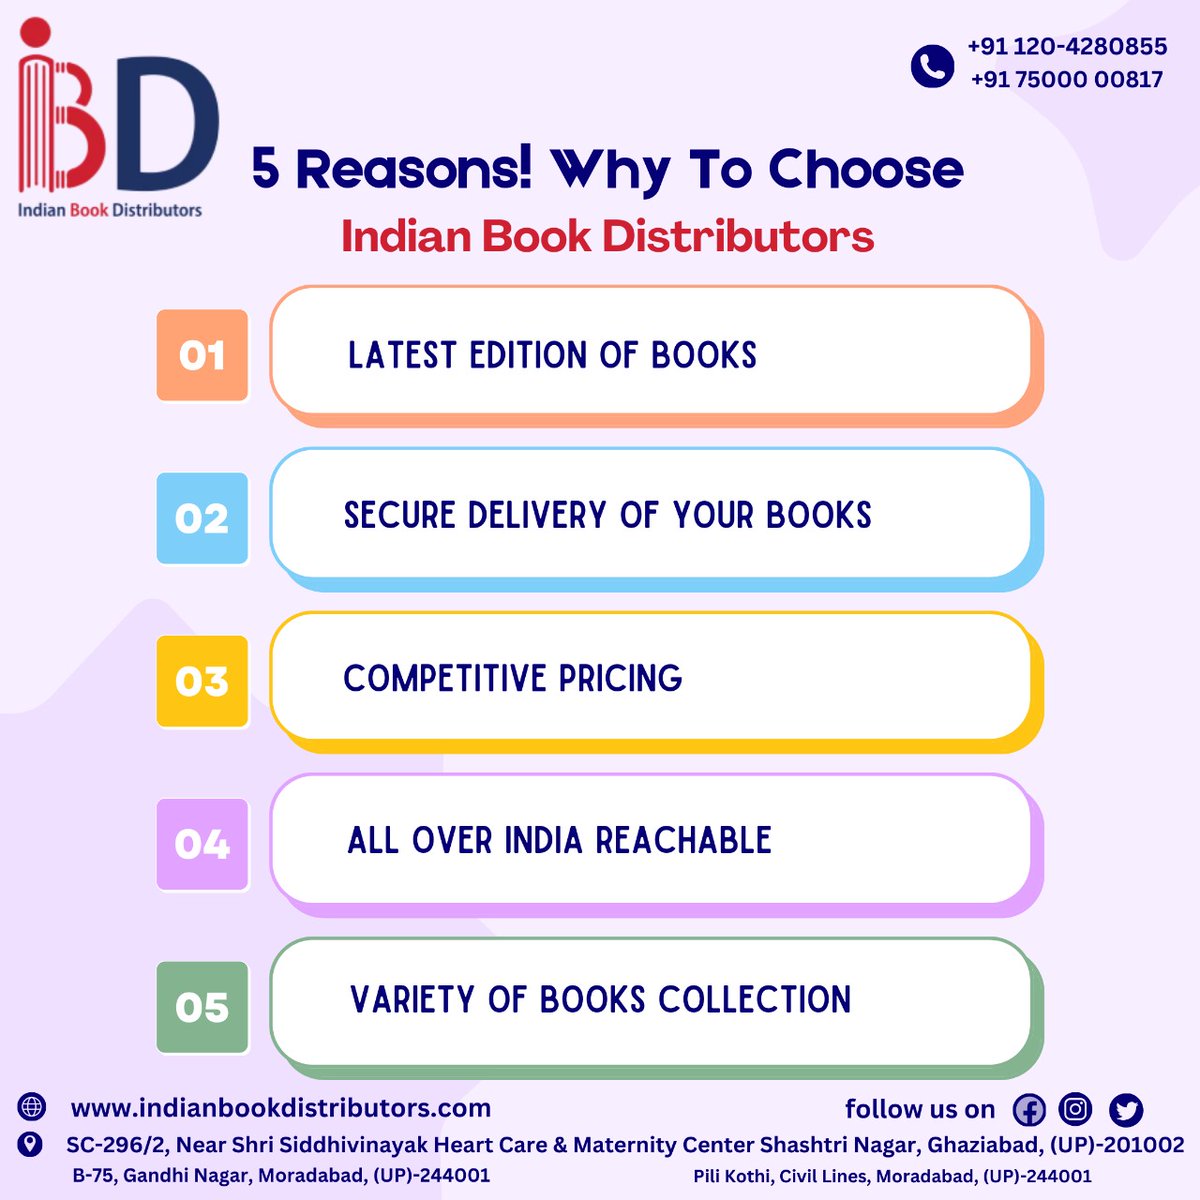 .#indianbookdistributors #CBSESchool #ICSESchool #books  #favourite #topchoiceawards #varietyofbookcollection #indiareachable #latesteditionofbooks